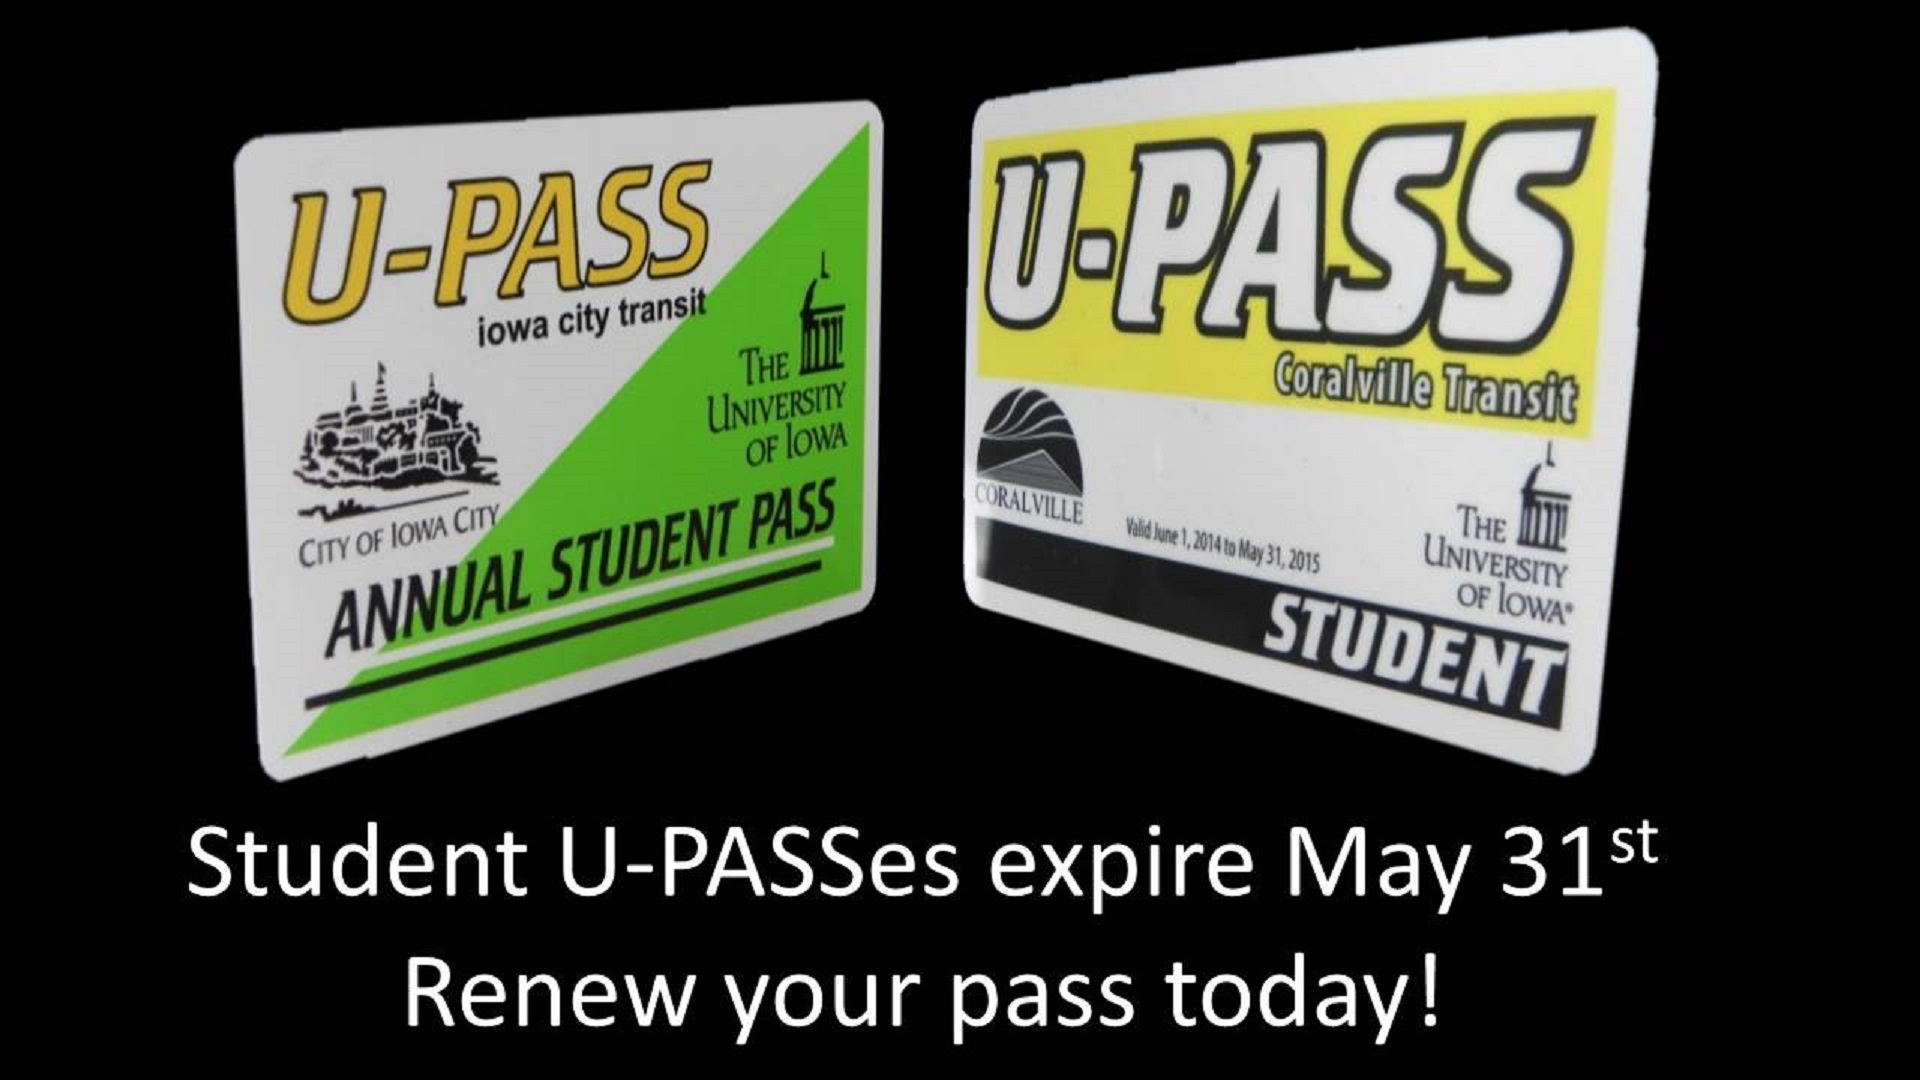 Student U-passes expire May 31st